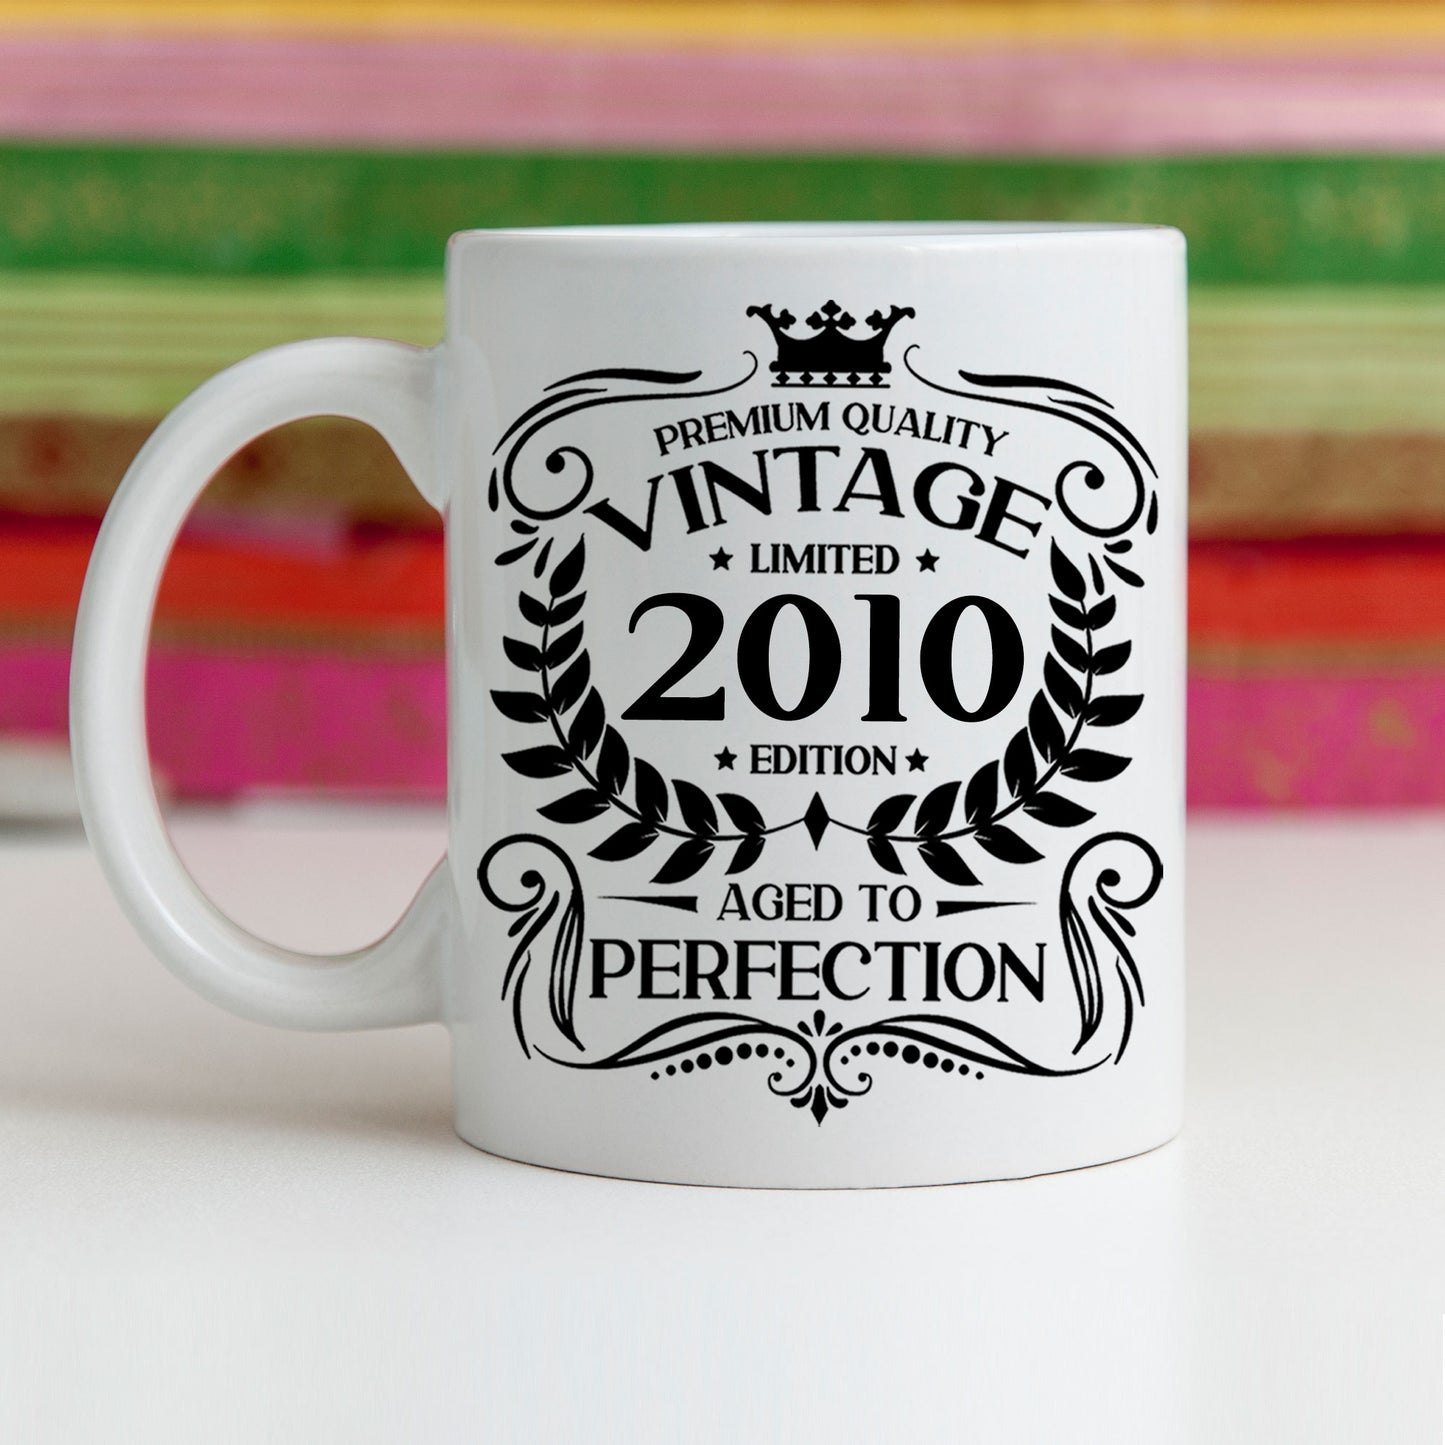 Personalised Vintage 2010 Mug and/or Coaster  - Always Looking Good - Mug On Its Own  